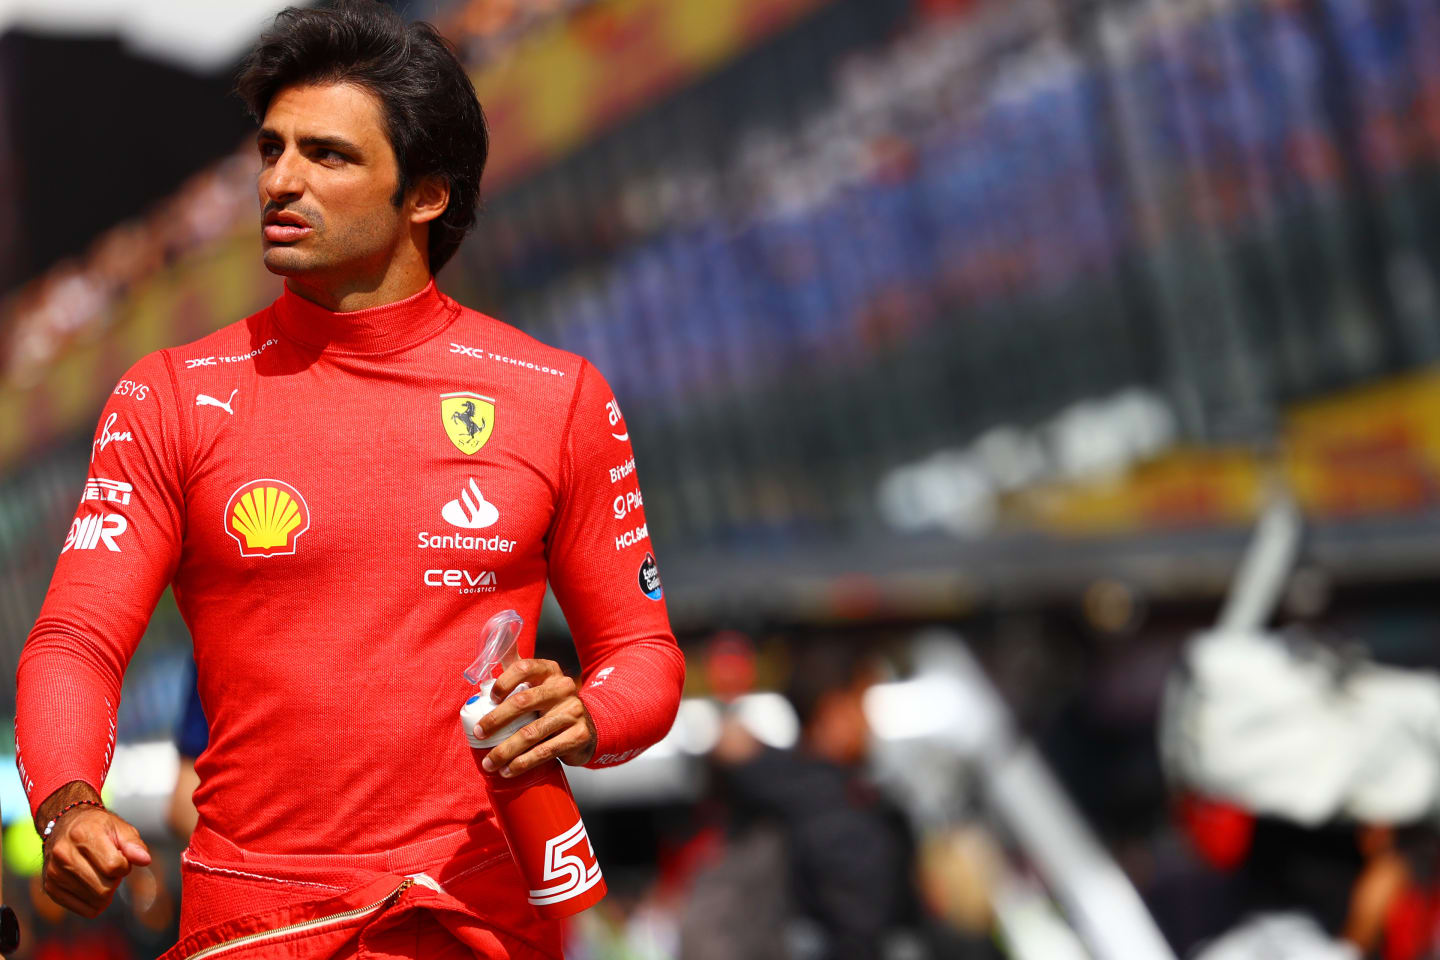 ZANDVOORT, NETHERLANDS - AUGUST 27: Carlos Sainz of Spain and Ferrari prepares to drive on the grid